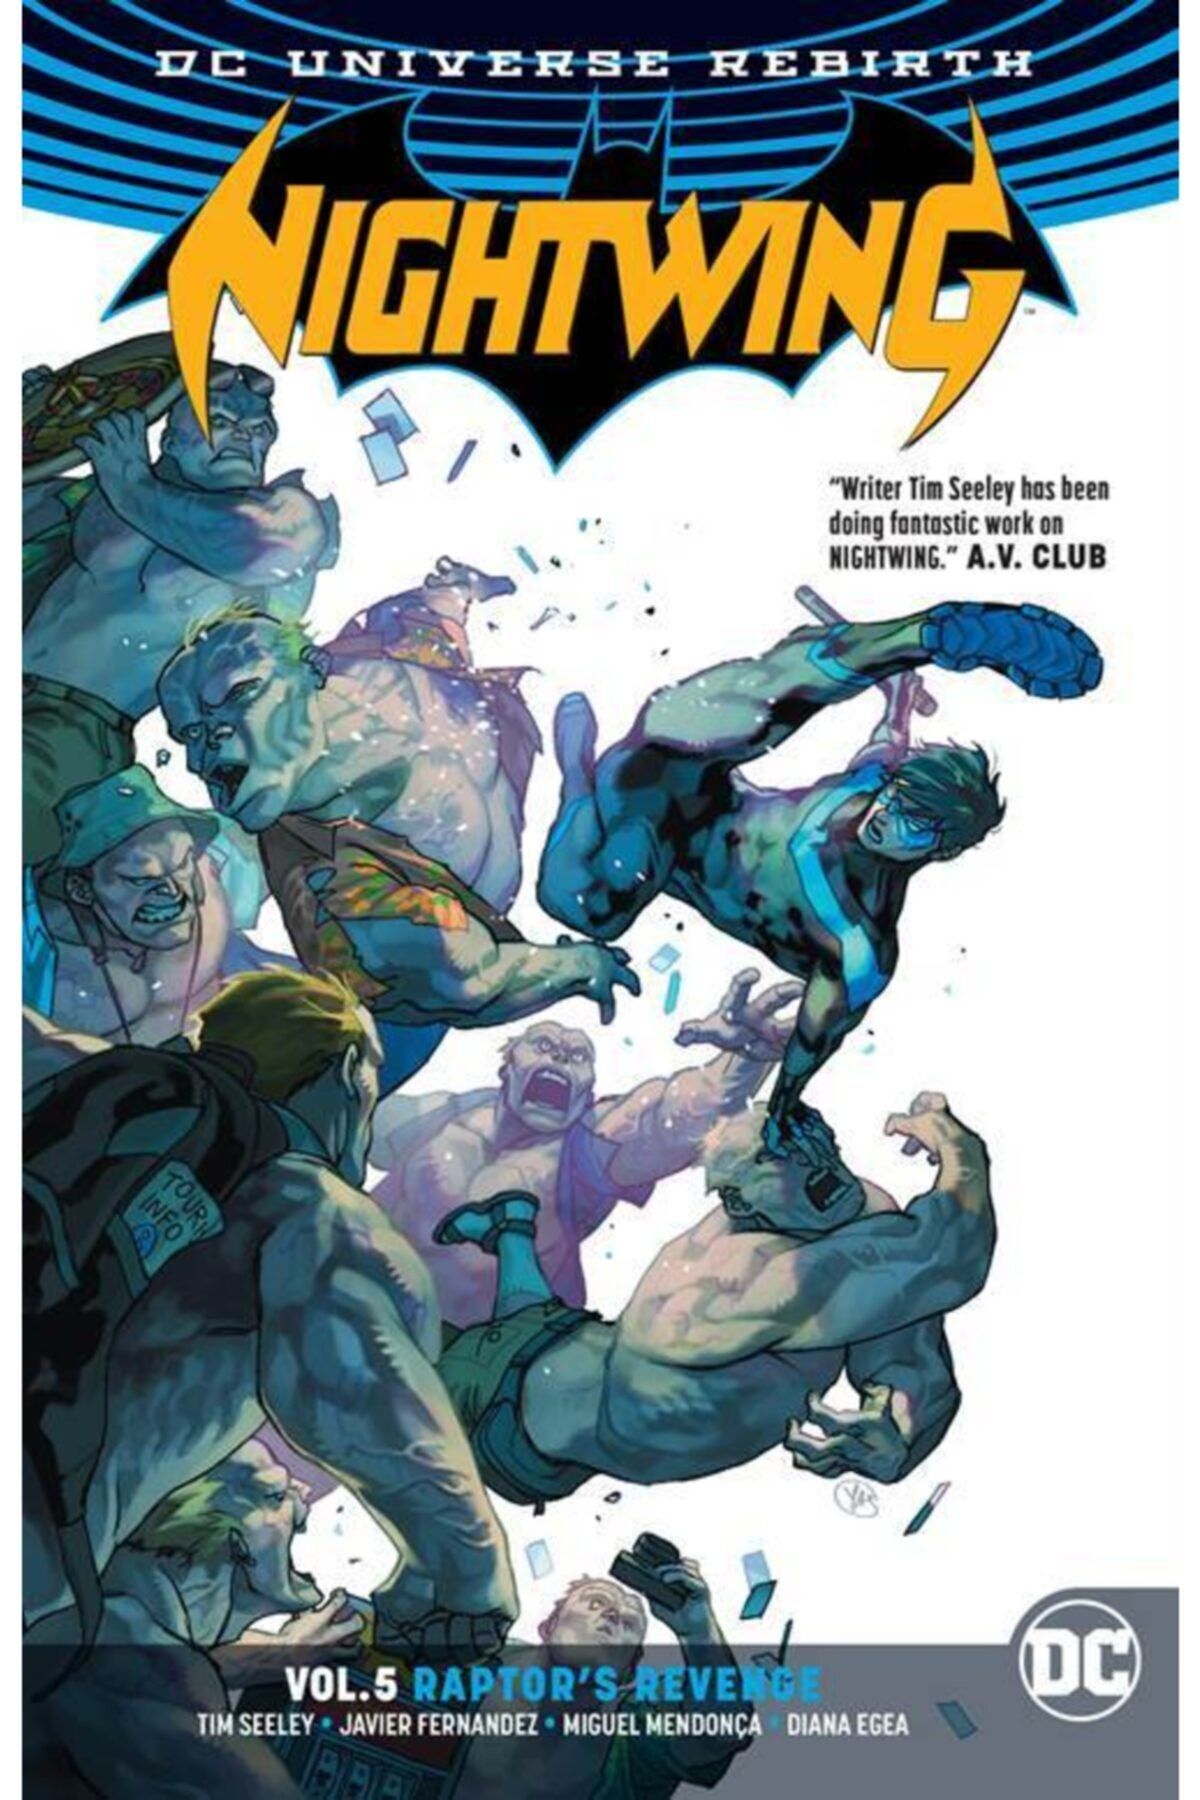 TM & DC Comics-Warner Bros Nightwing Vol. 5: Raptor's Revenge (rebirth)